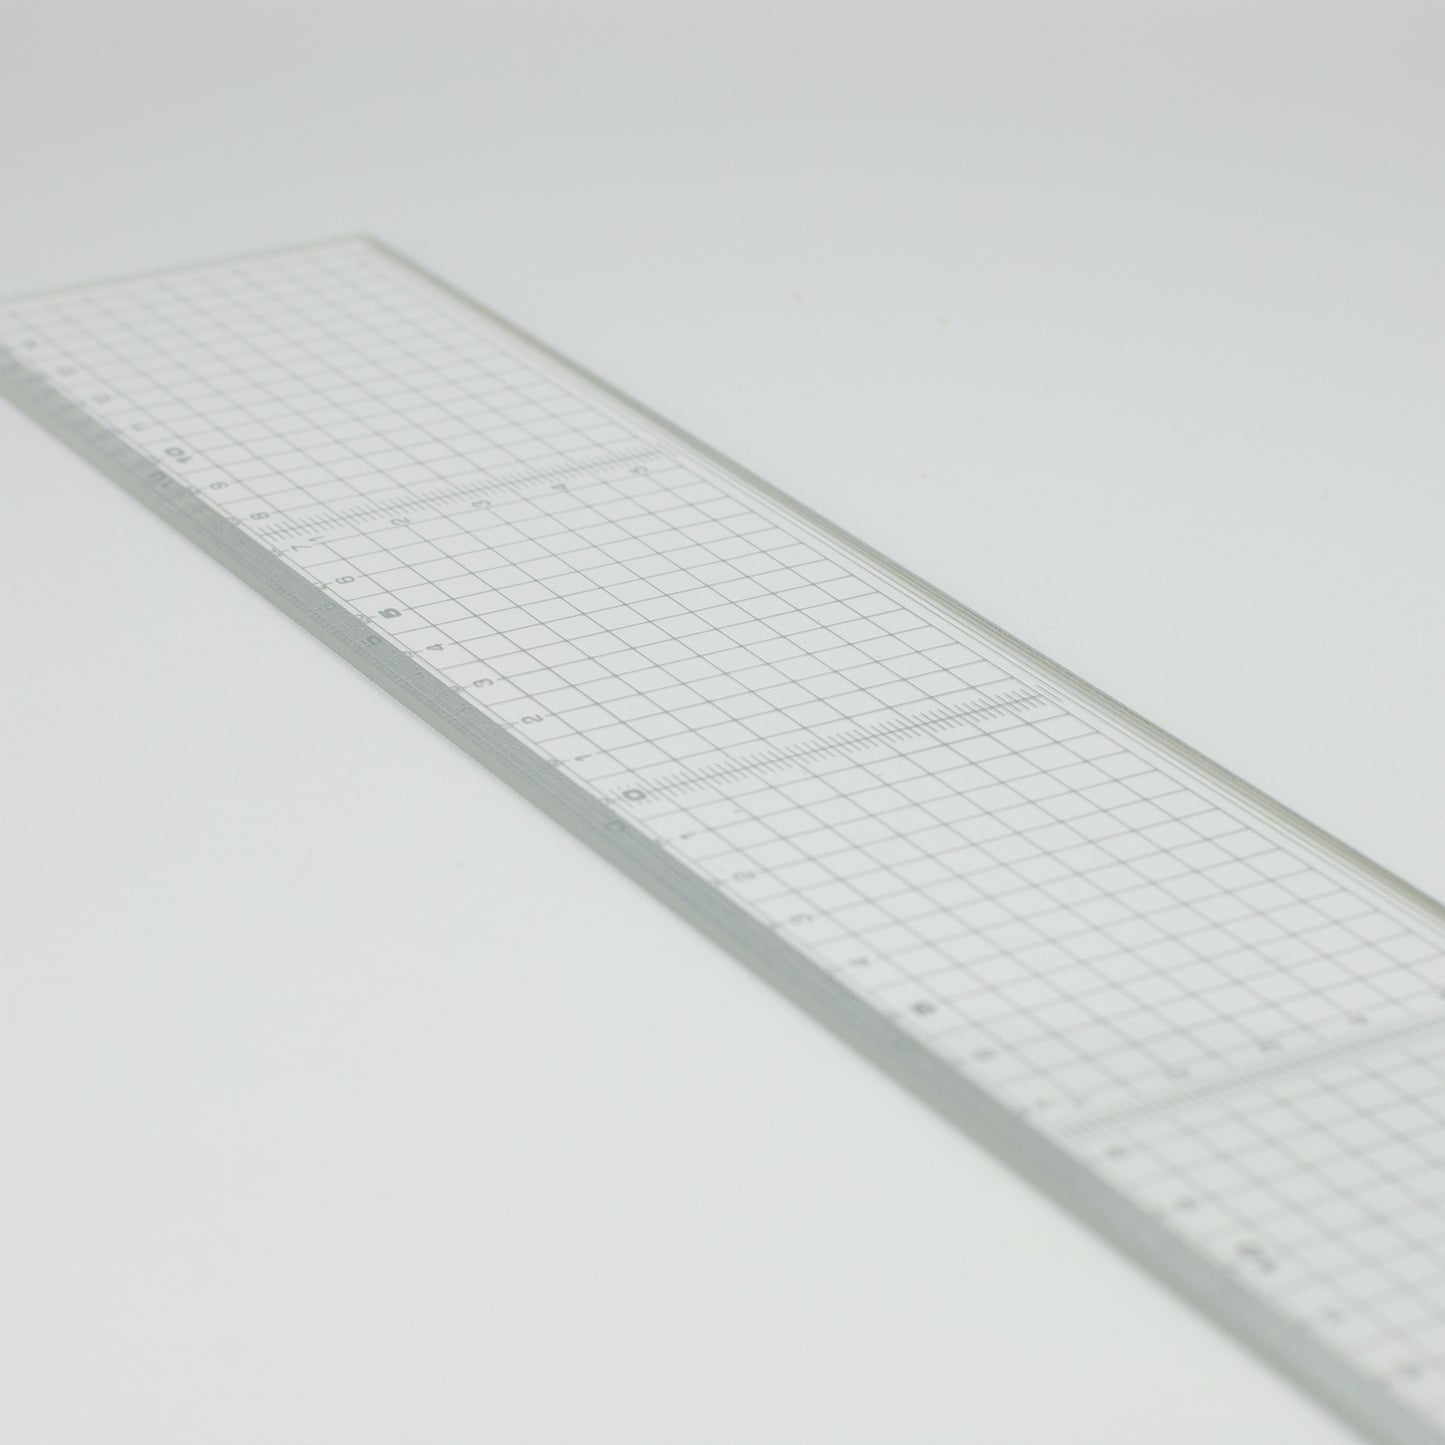 Japanese Transparent Measure Ruler with Metal